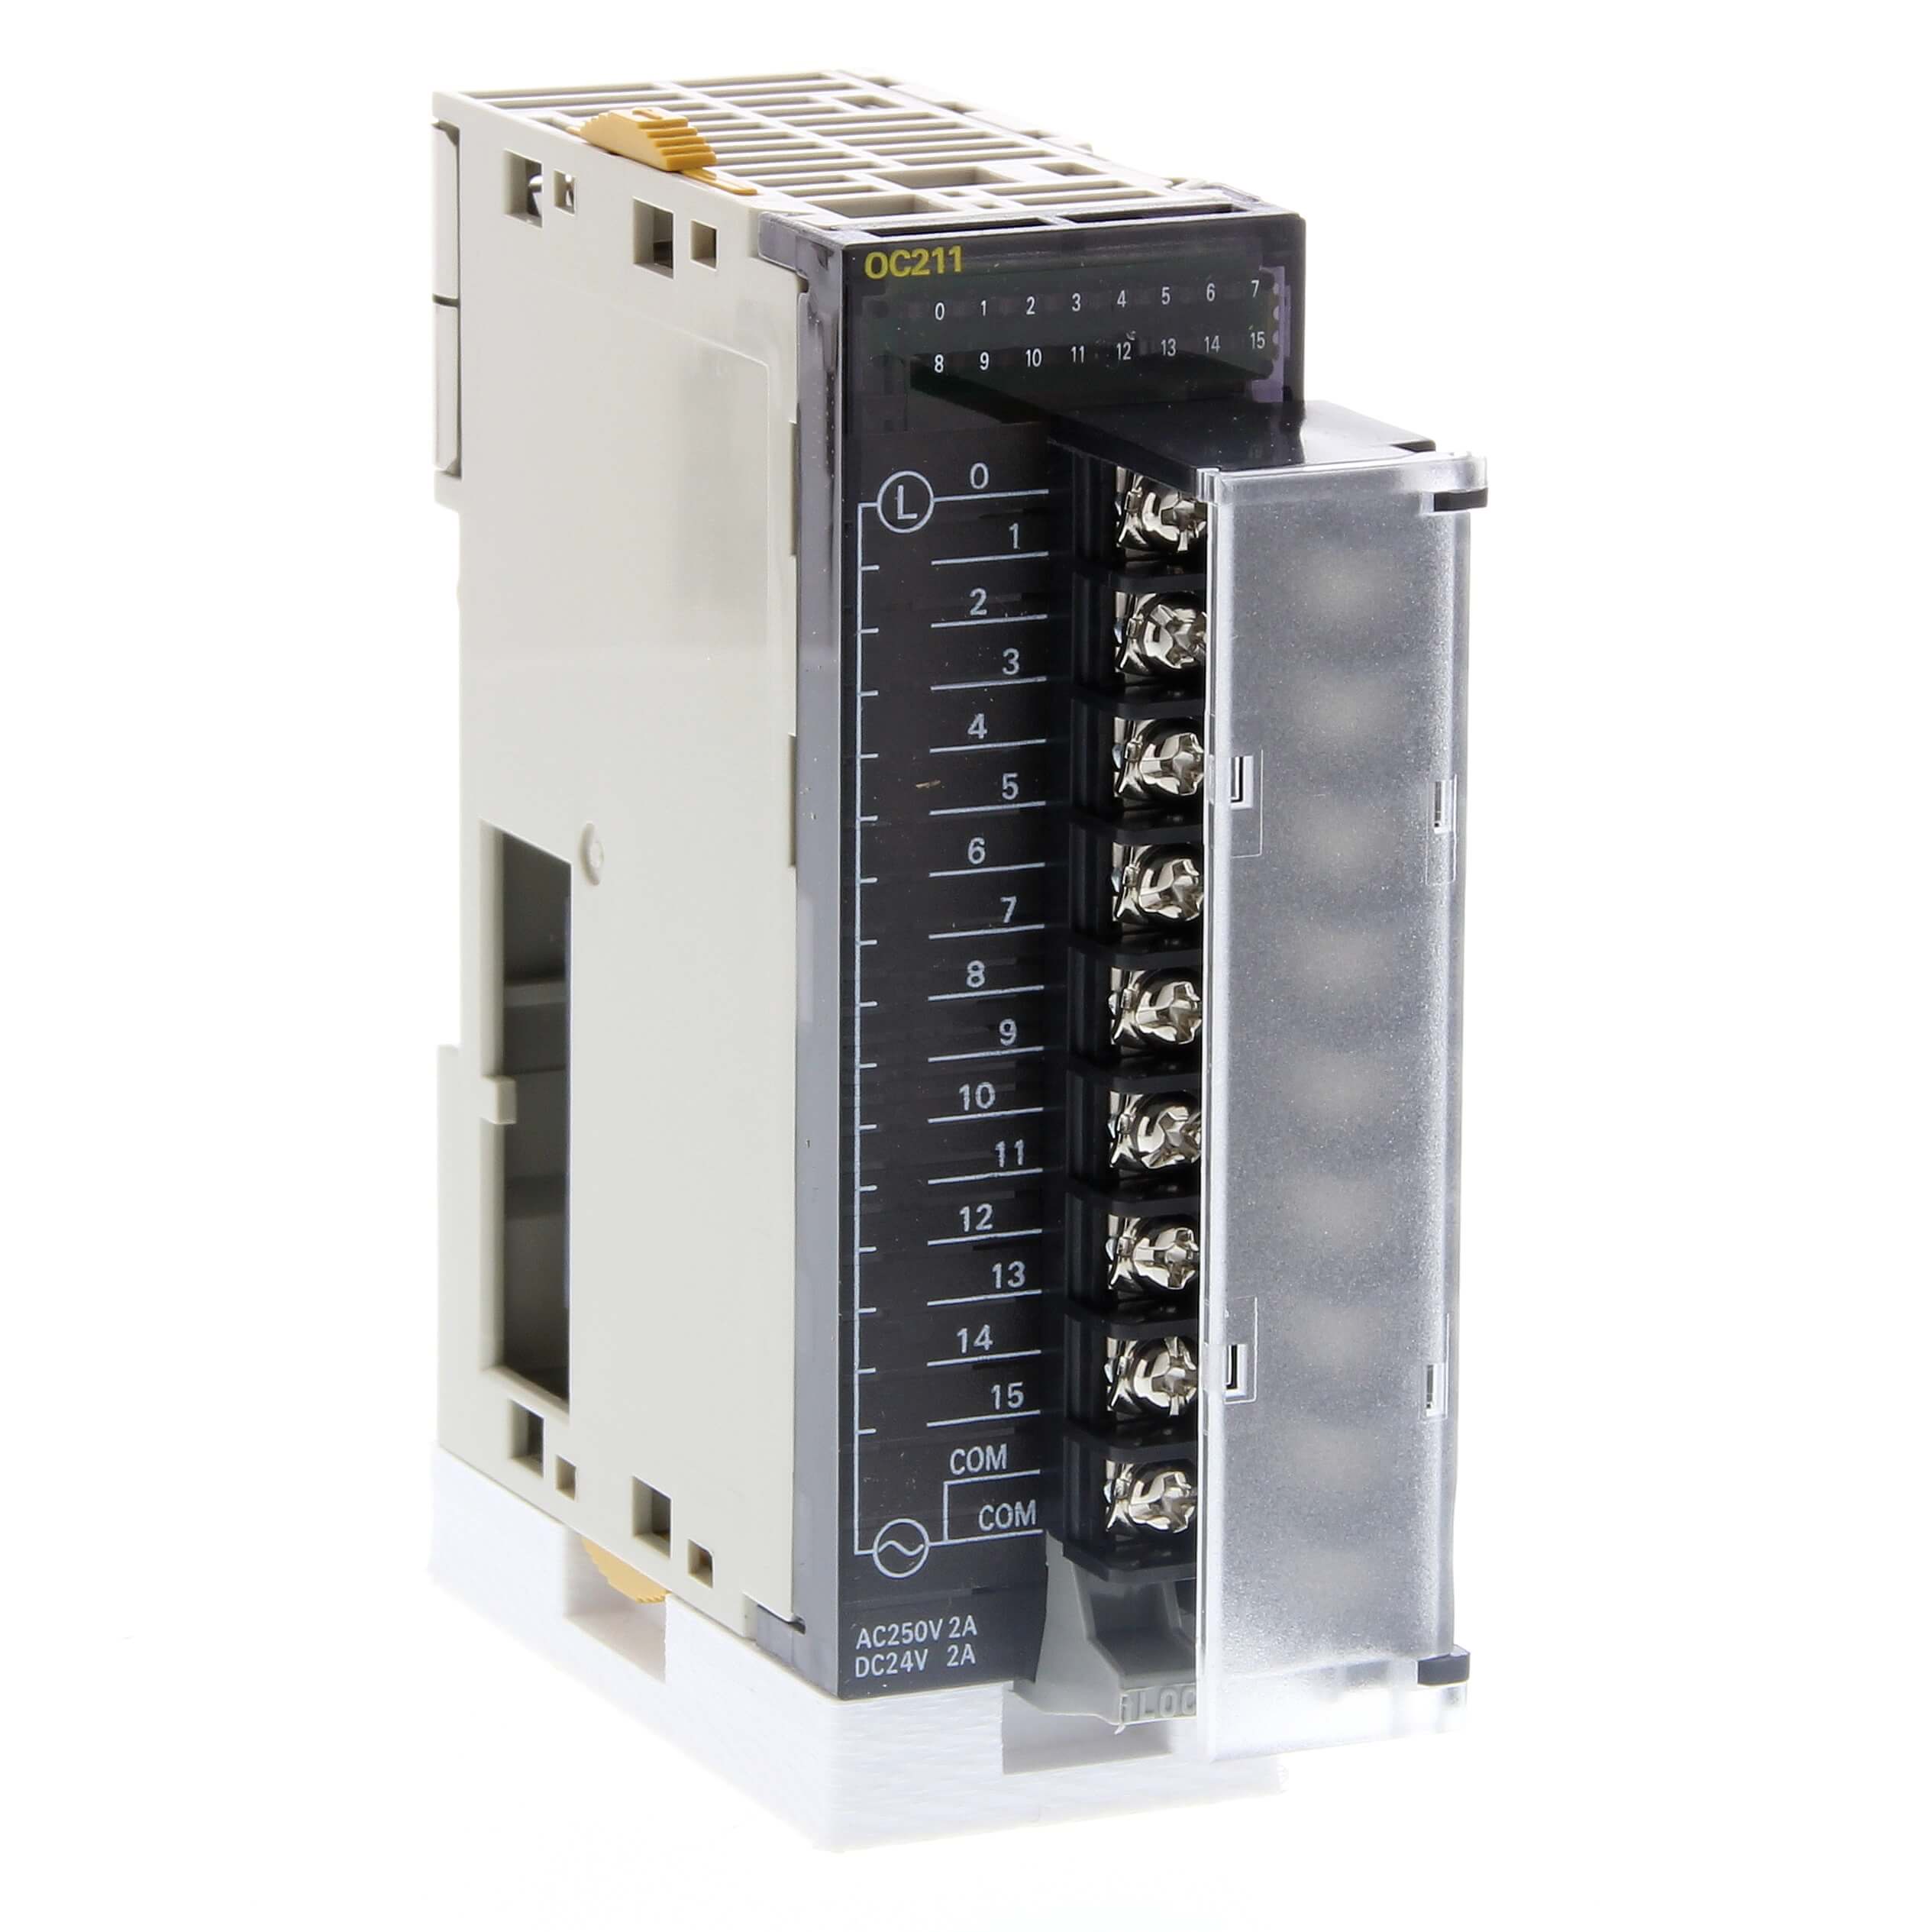 NEW Omron PLC Output Module CJ1W-OC211 Output Control Module For Automation